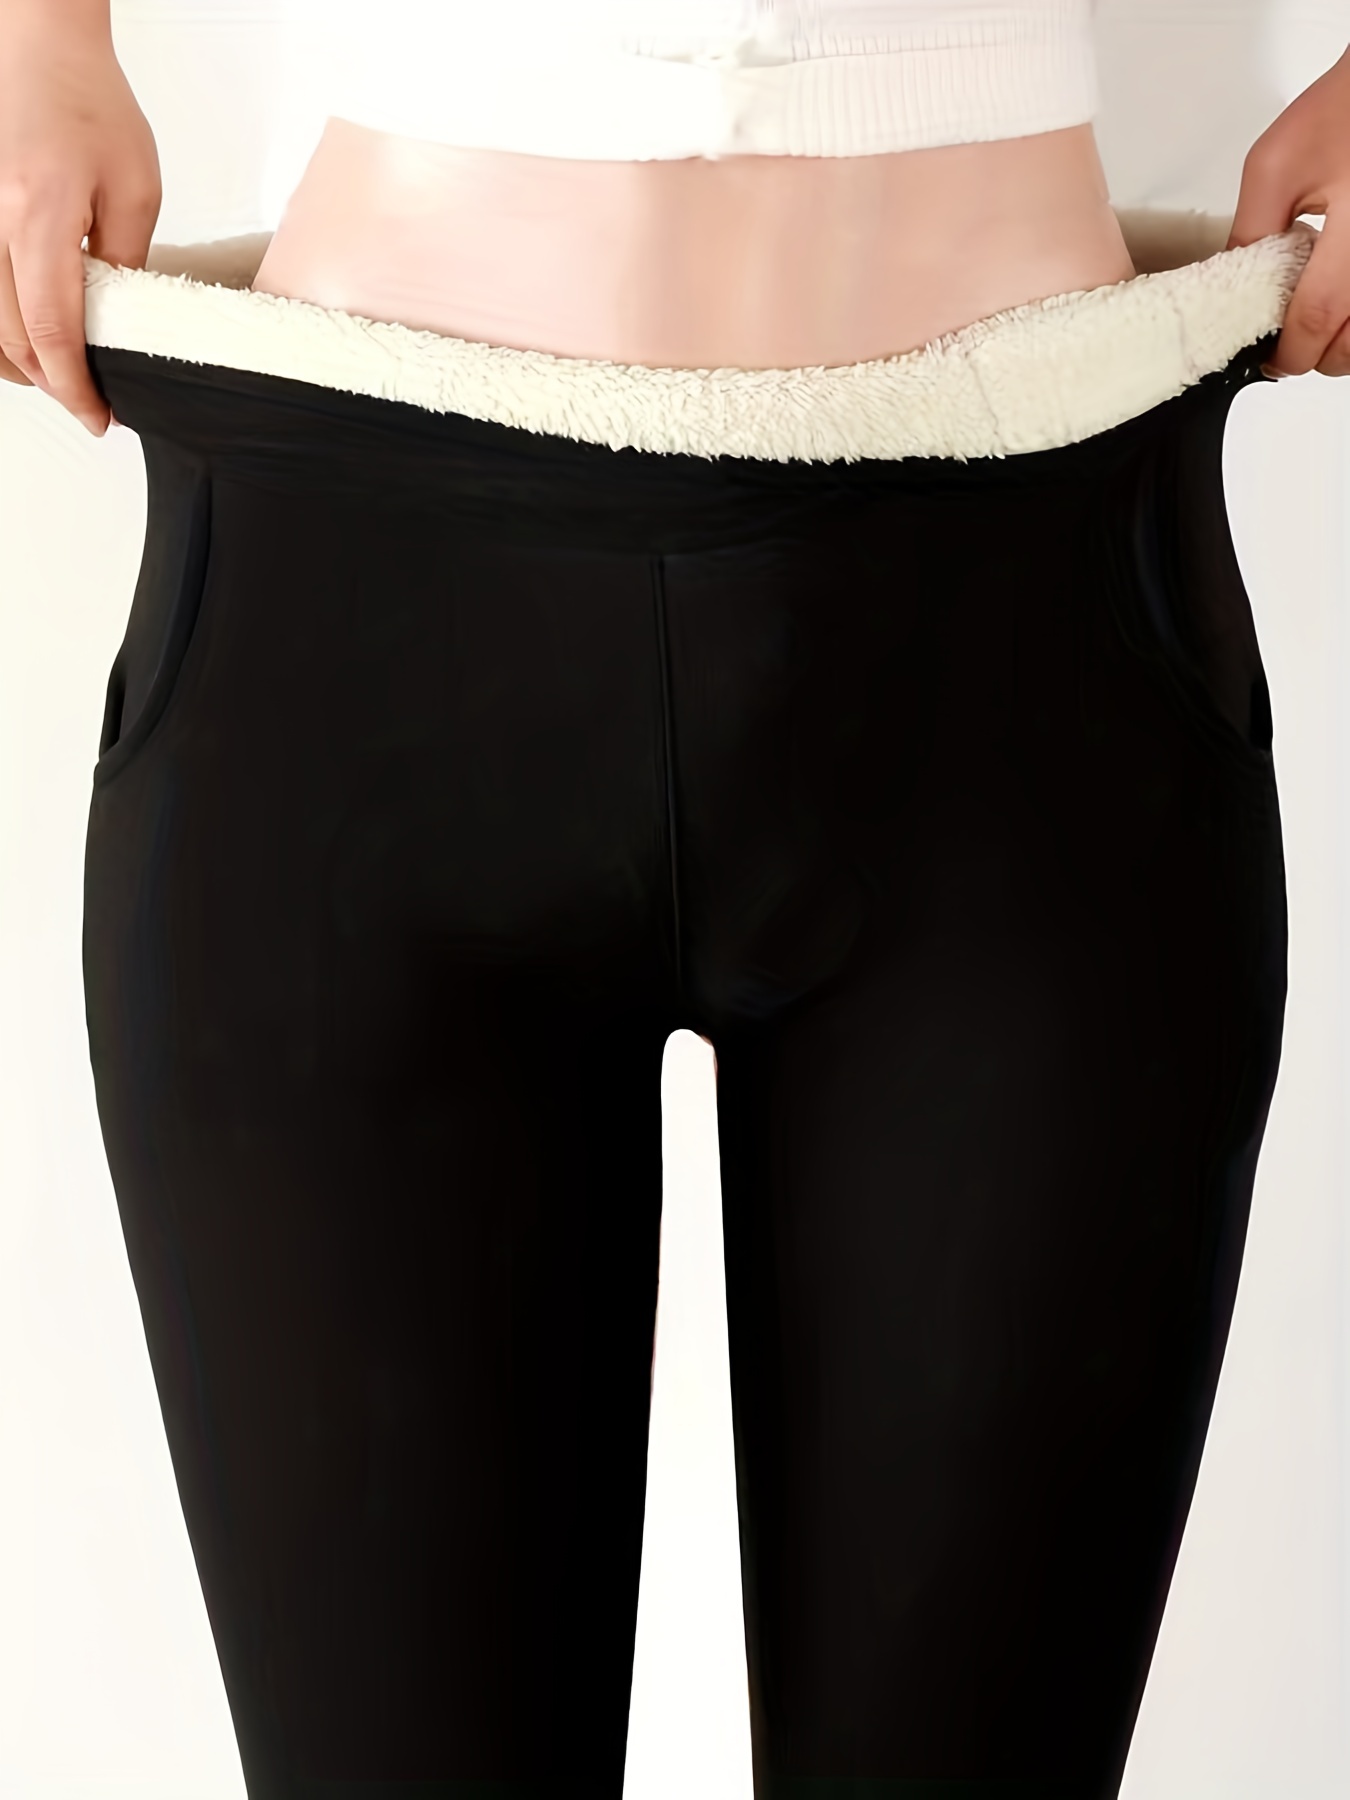  we fleece Women's Soft Capri Leggings for Women-High Waisted  Tummy Control Non See Through Workout Running Black Leggings Yoga Pants ( White, Small-Medium) : Clothing, Shoes & Jewelry